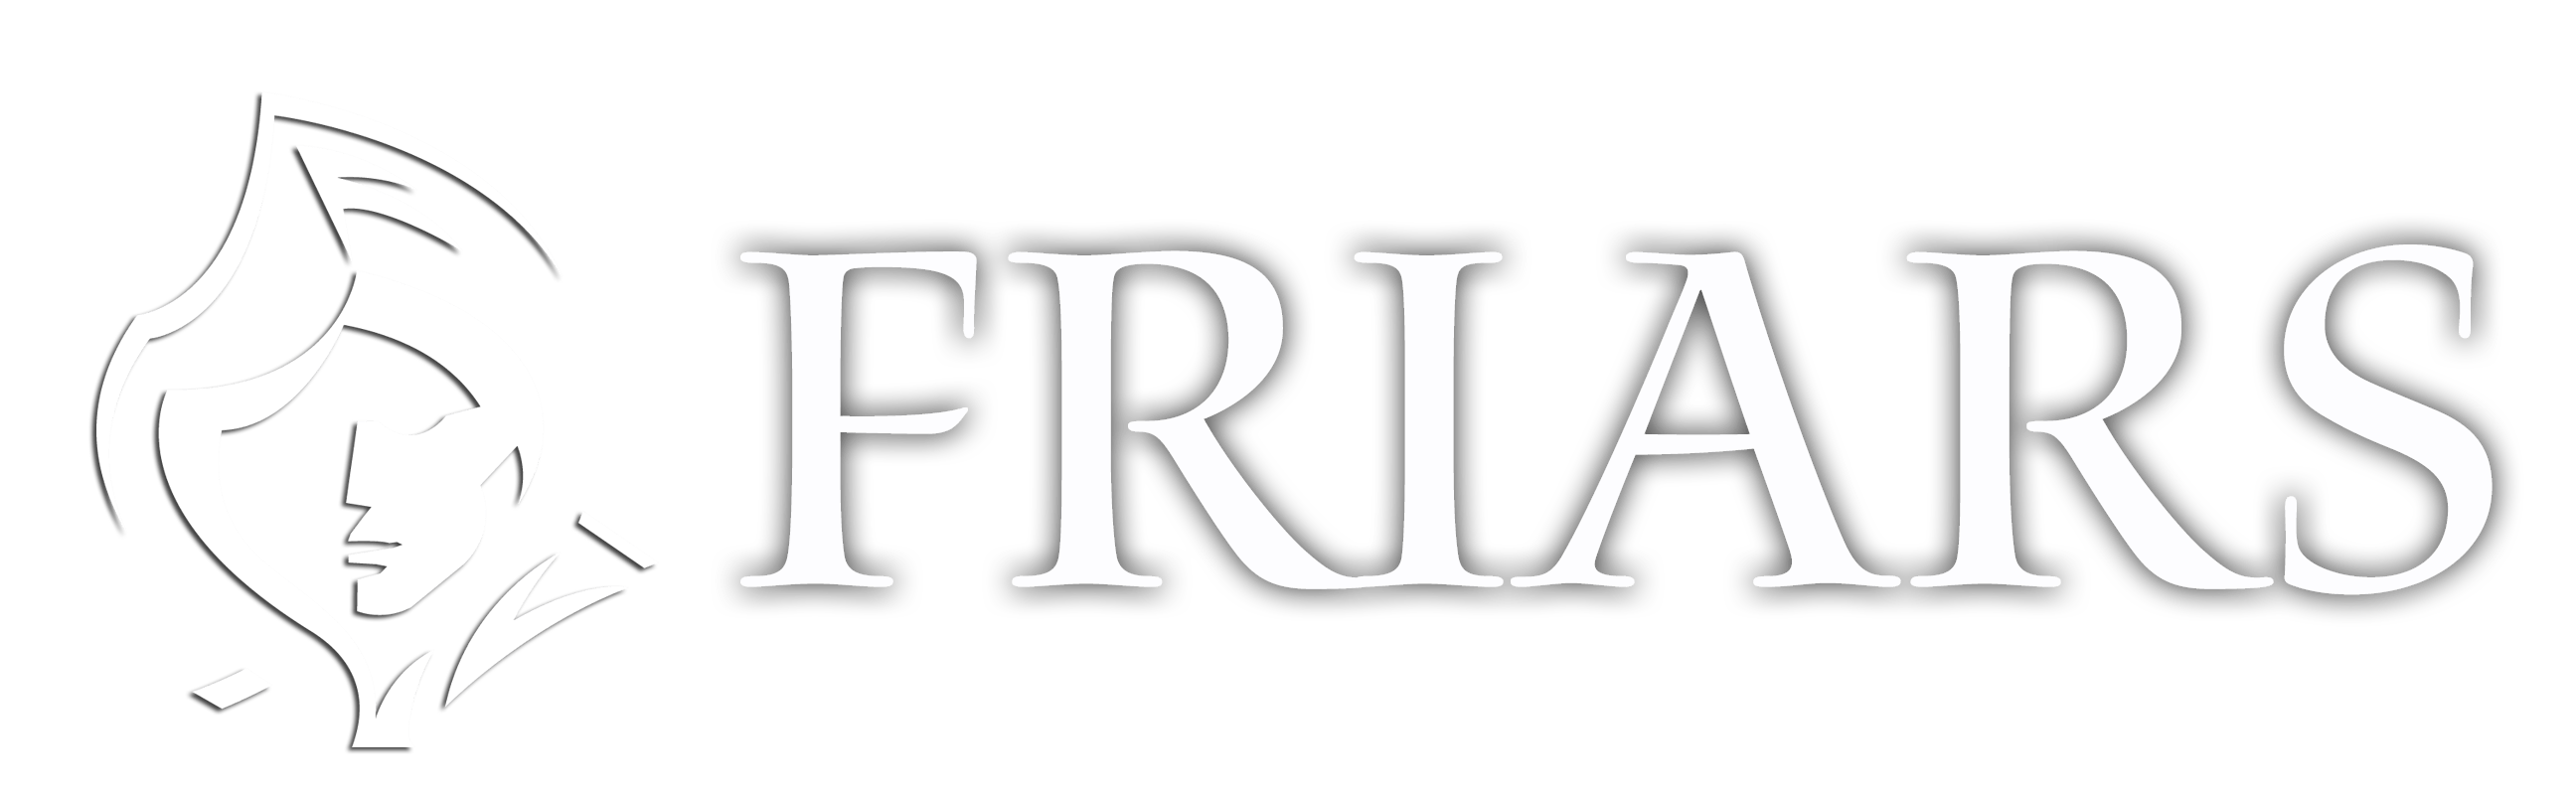 Friars Logo - Penn Friars. University of Pennsylvania Senior Society